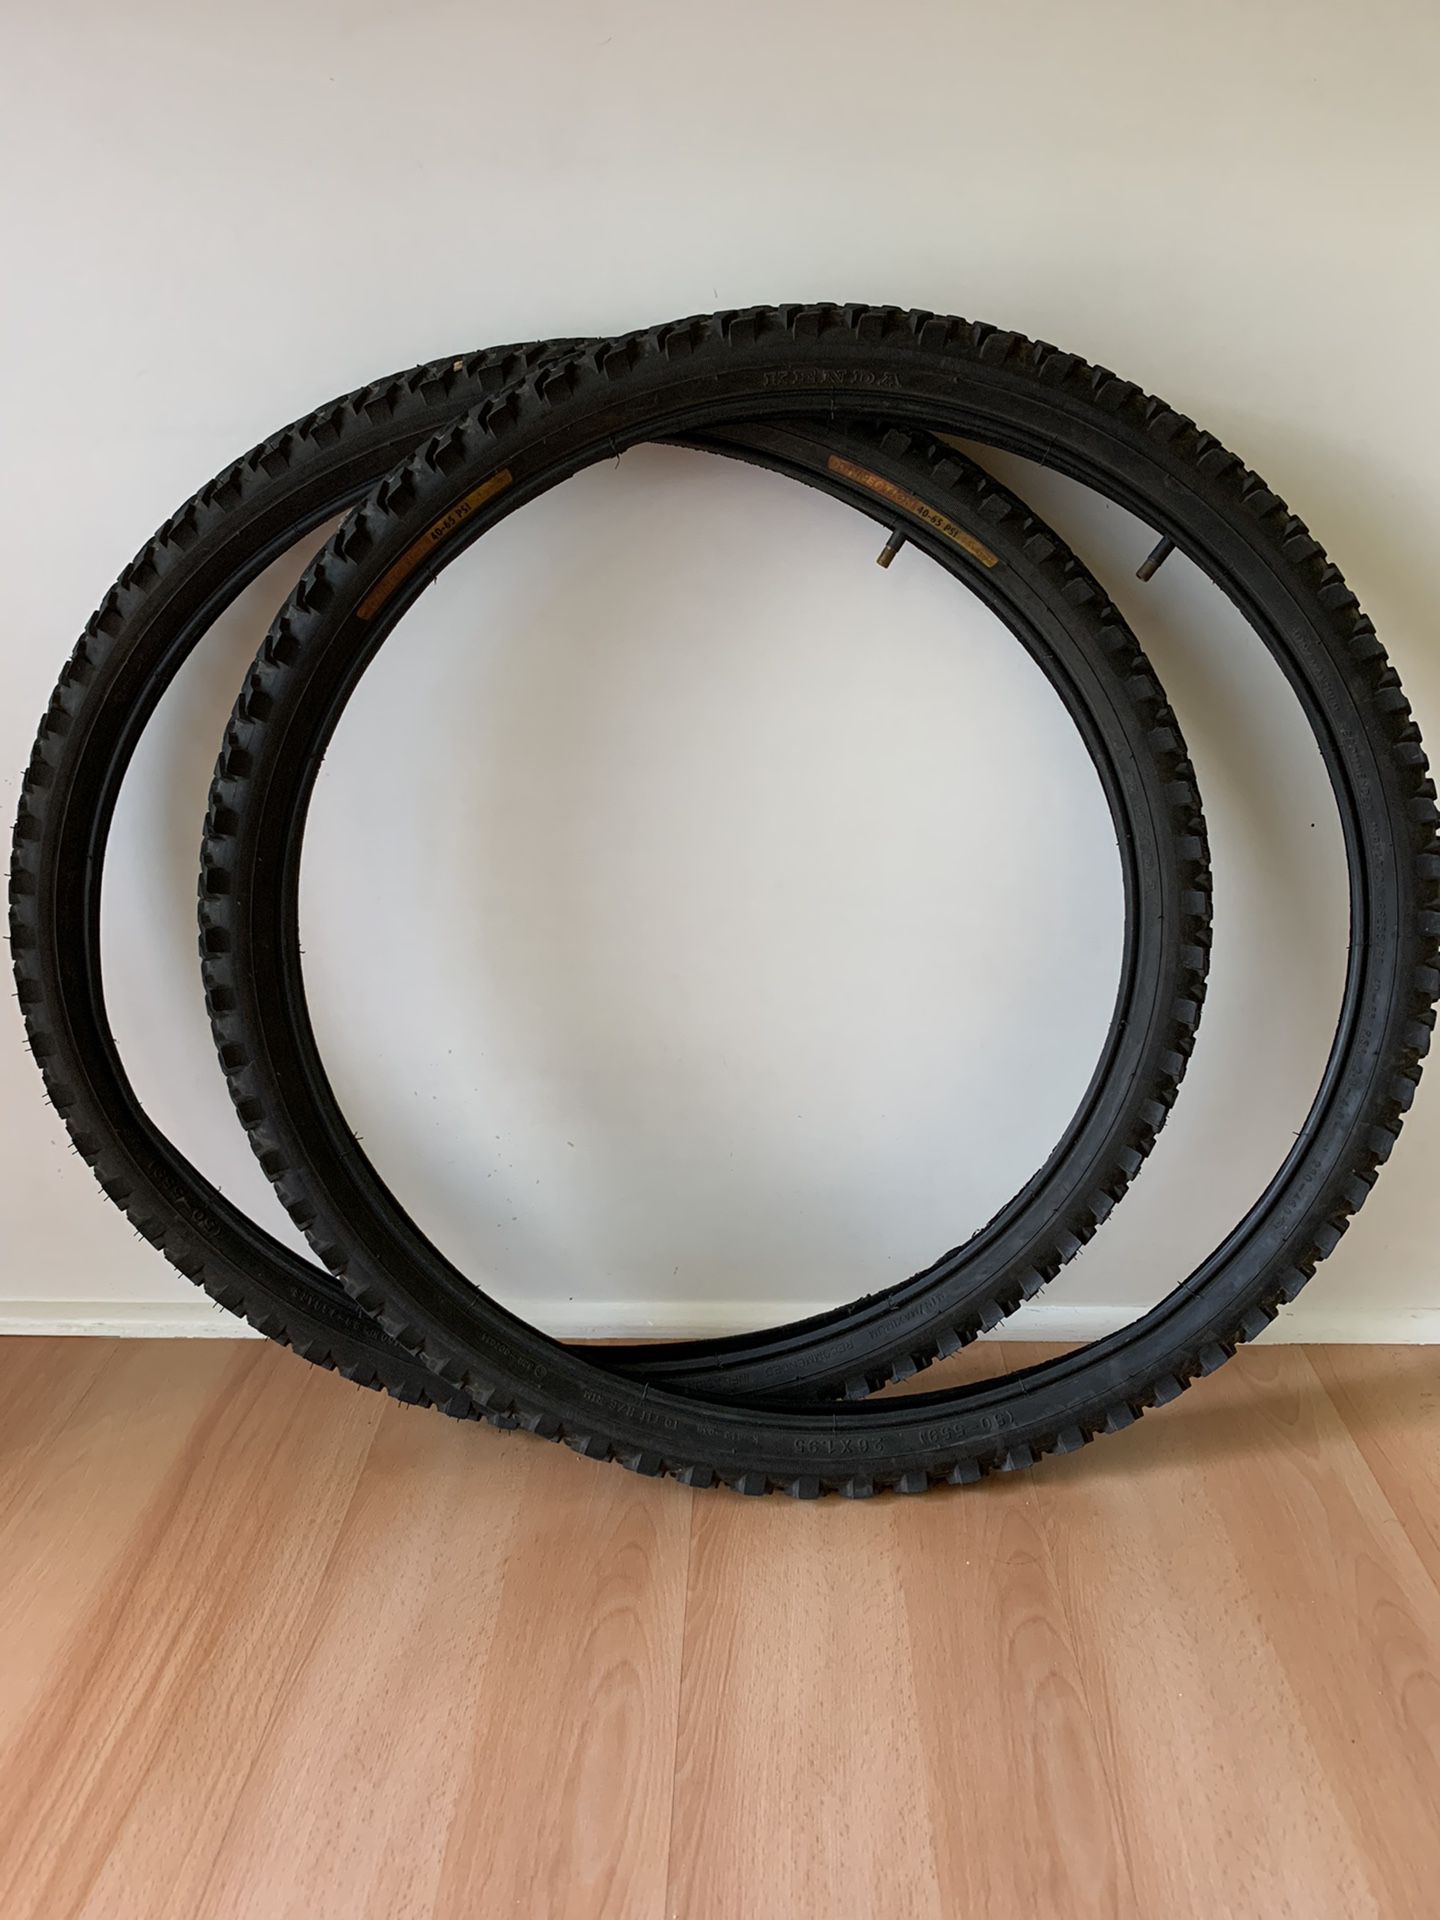 Mountain Bike Tires - 26x1.95 Kenda